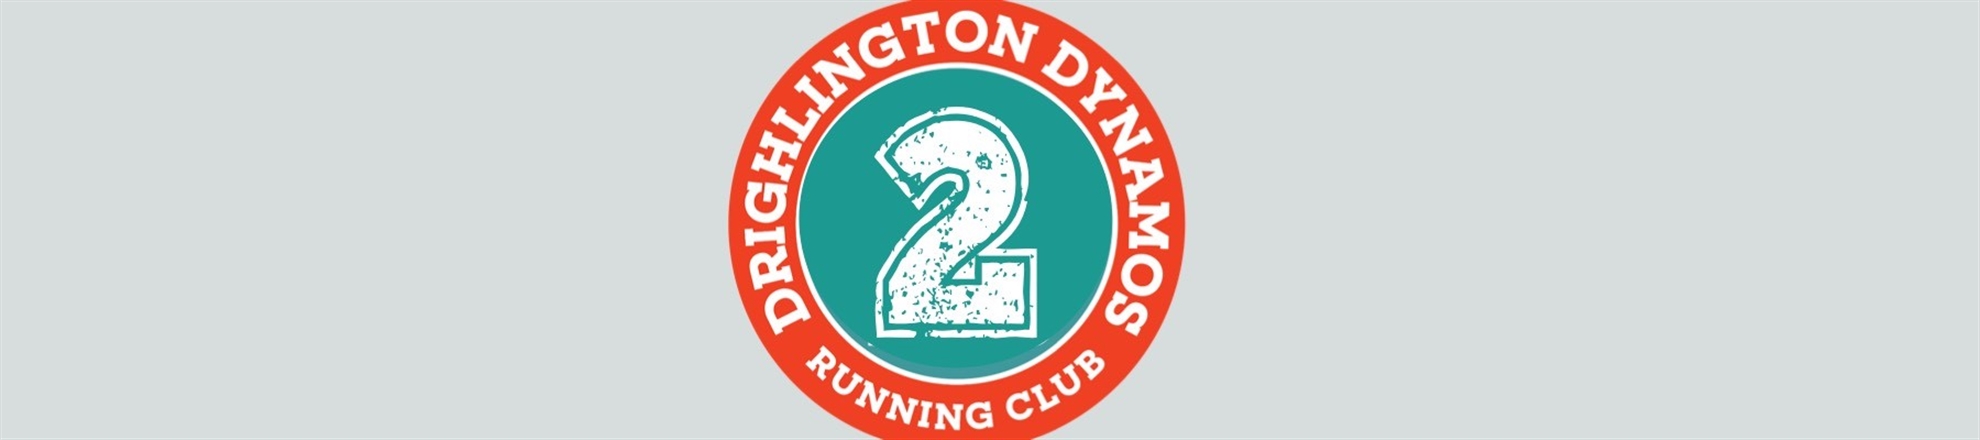 Drighlington Community Sports Club - Group 2